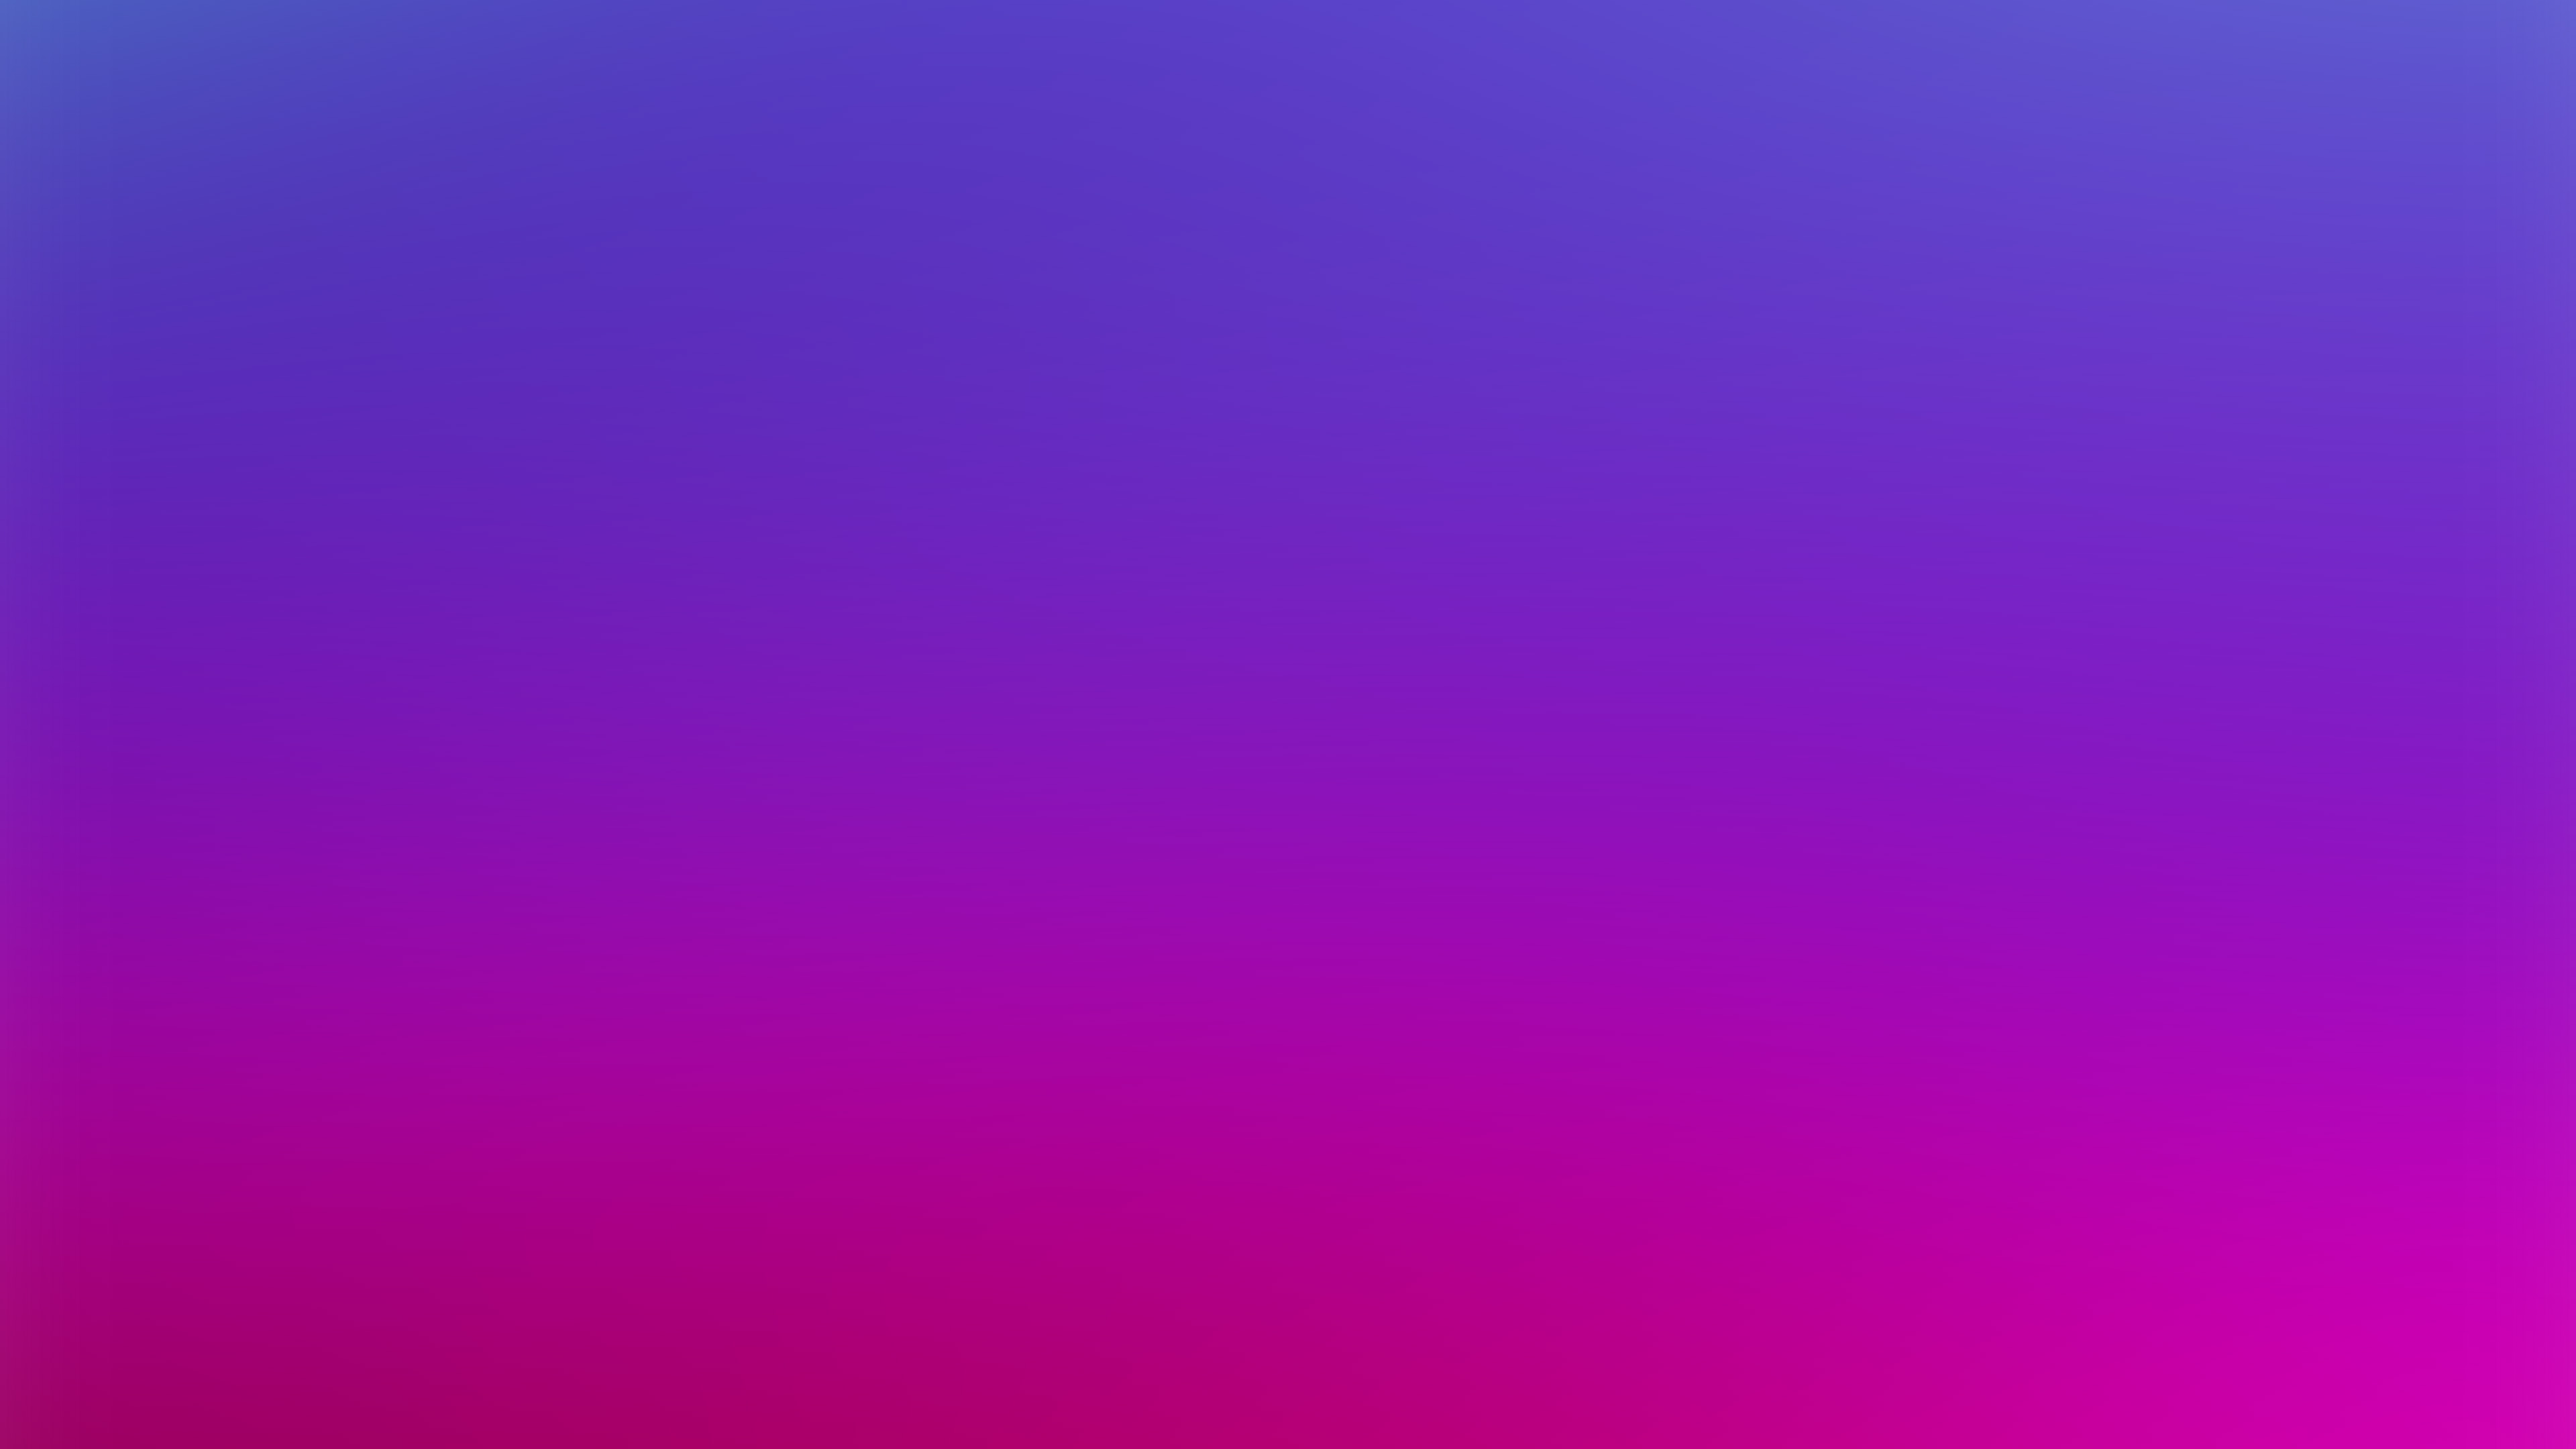 wallpaper for desktop, laptop. blue pink purple blur gradation